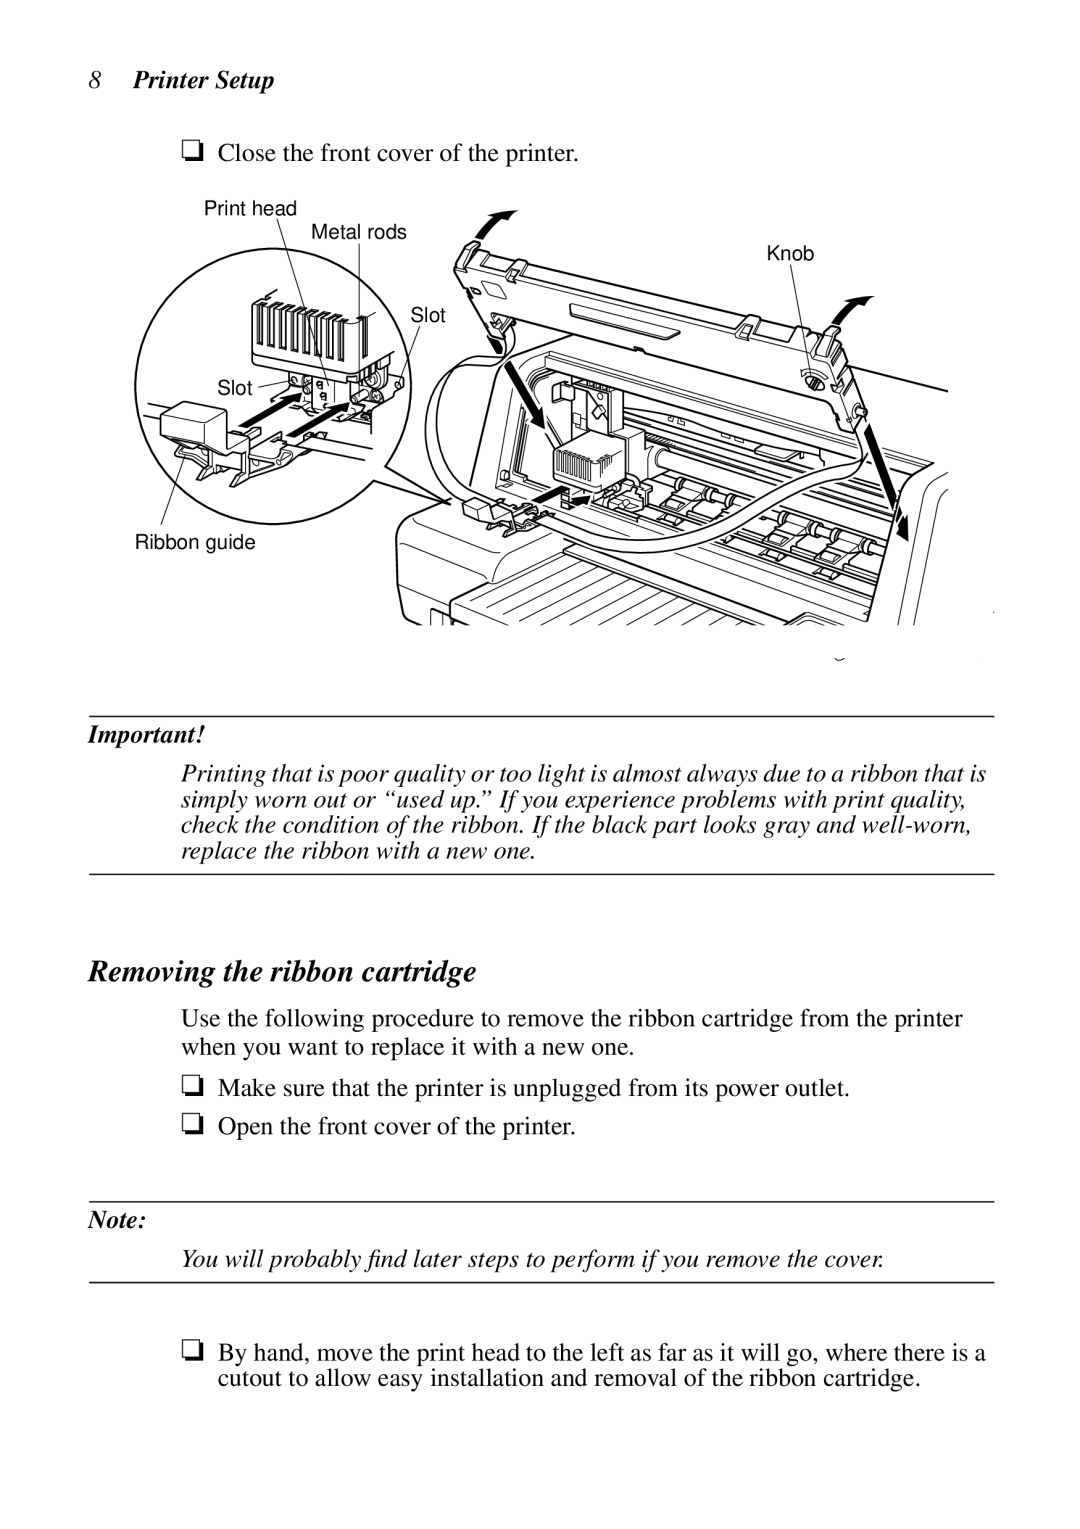 Star Micronics LC-8021 manual Removing the ribbon cartridge, Printer Setup 